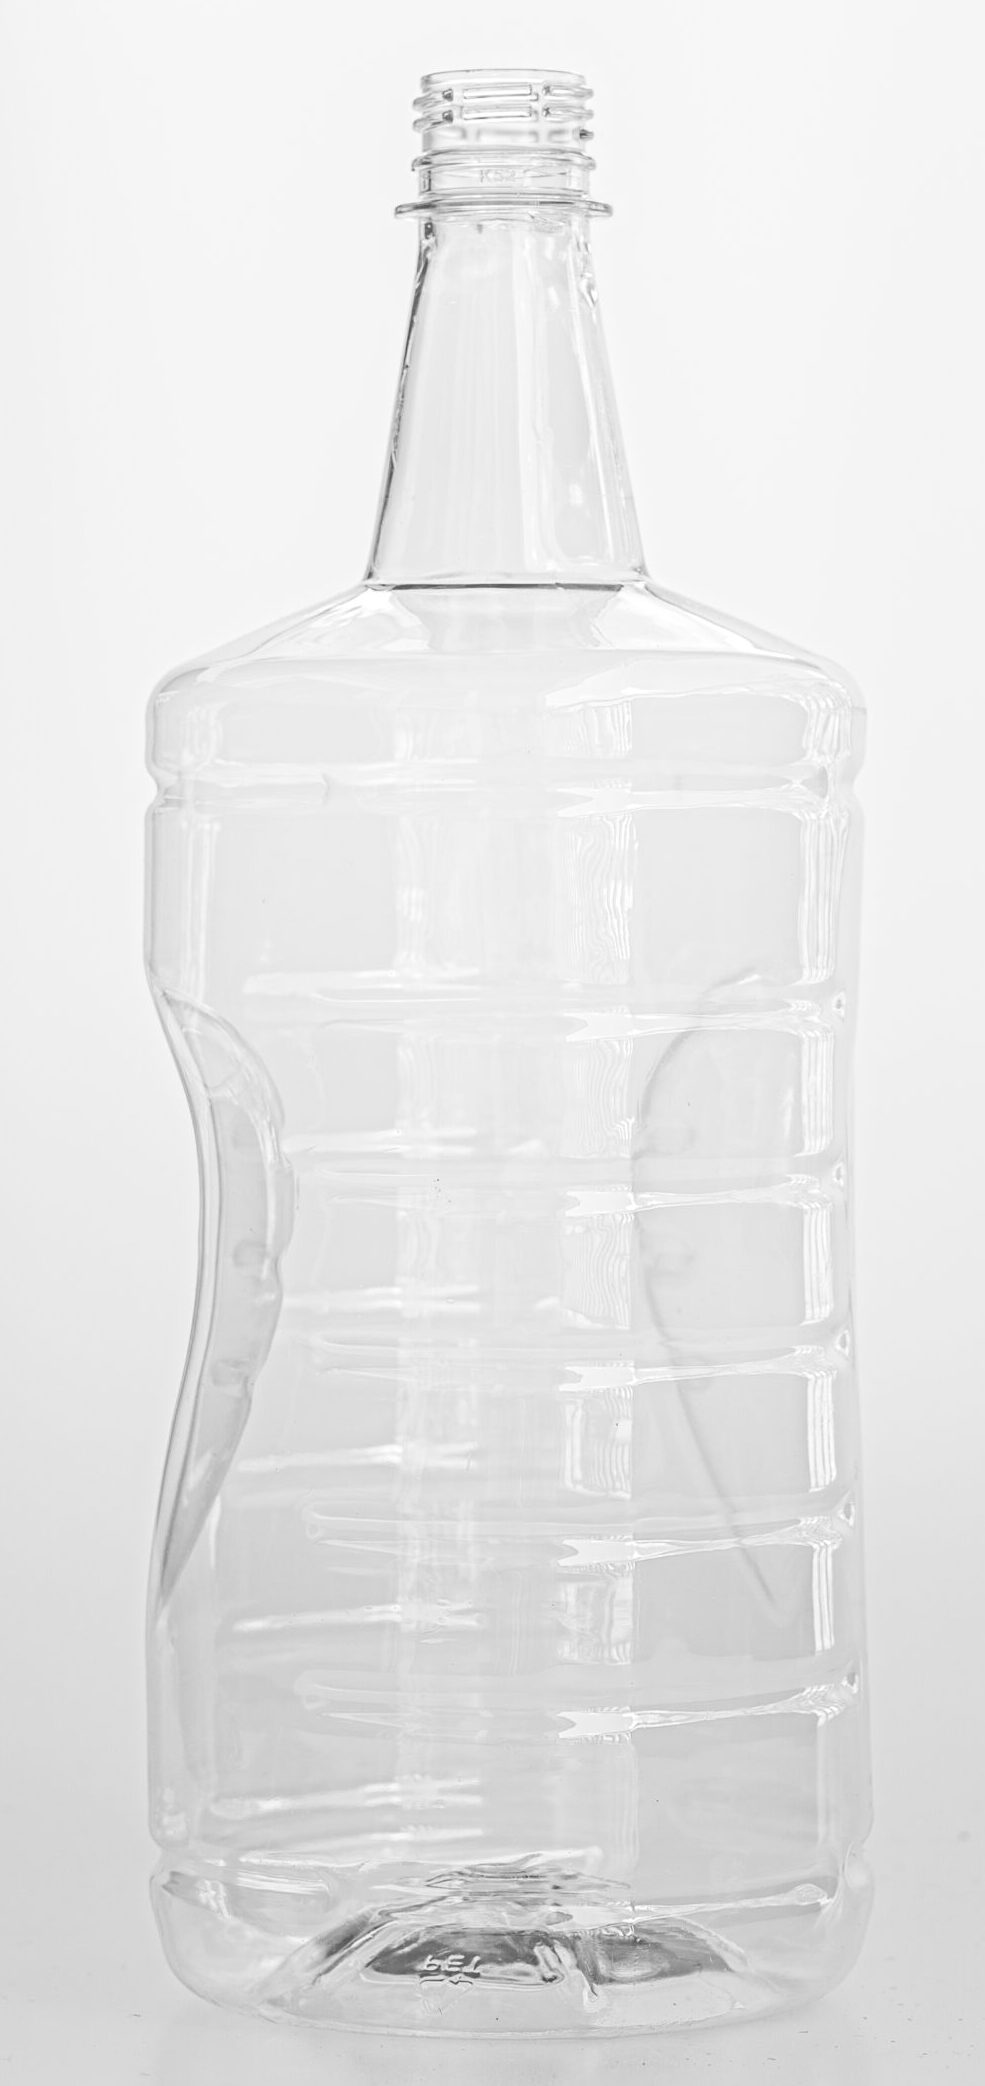 Botella de PET de 1.75 ltrs transparente/ Garrafon / Gancho / 1750cc / 1750ml-image